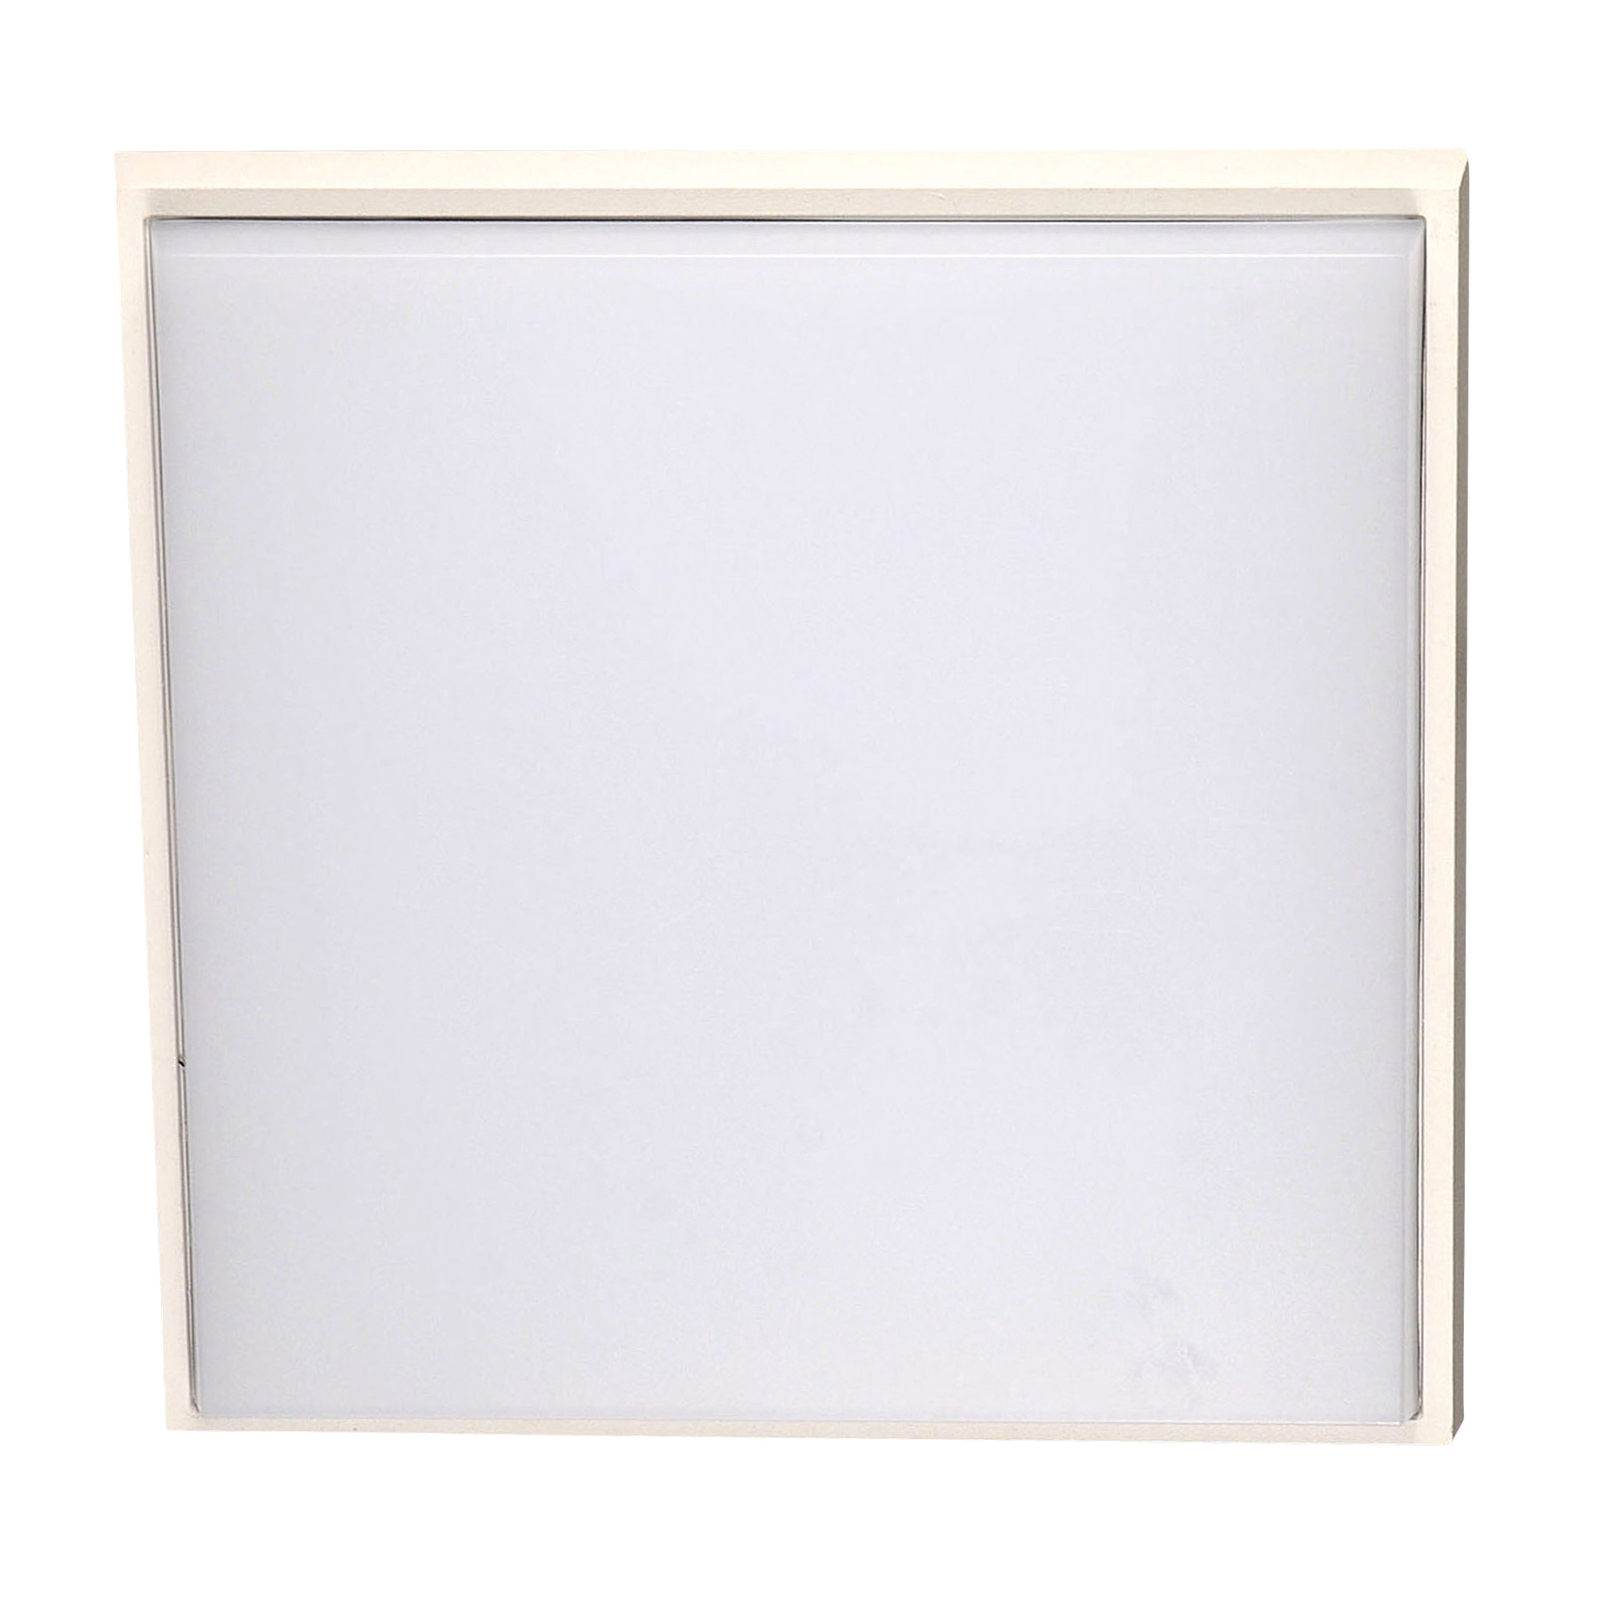 LED buiten plafondlamp Desdy, 30x30 cm, wit